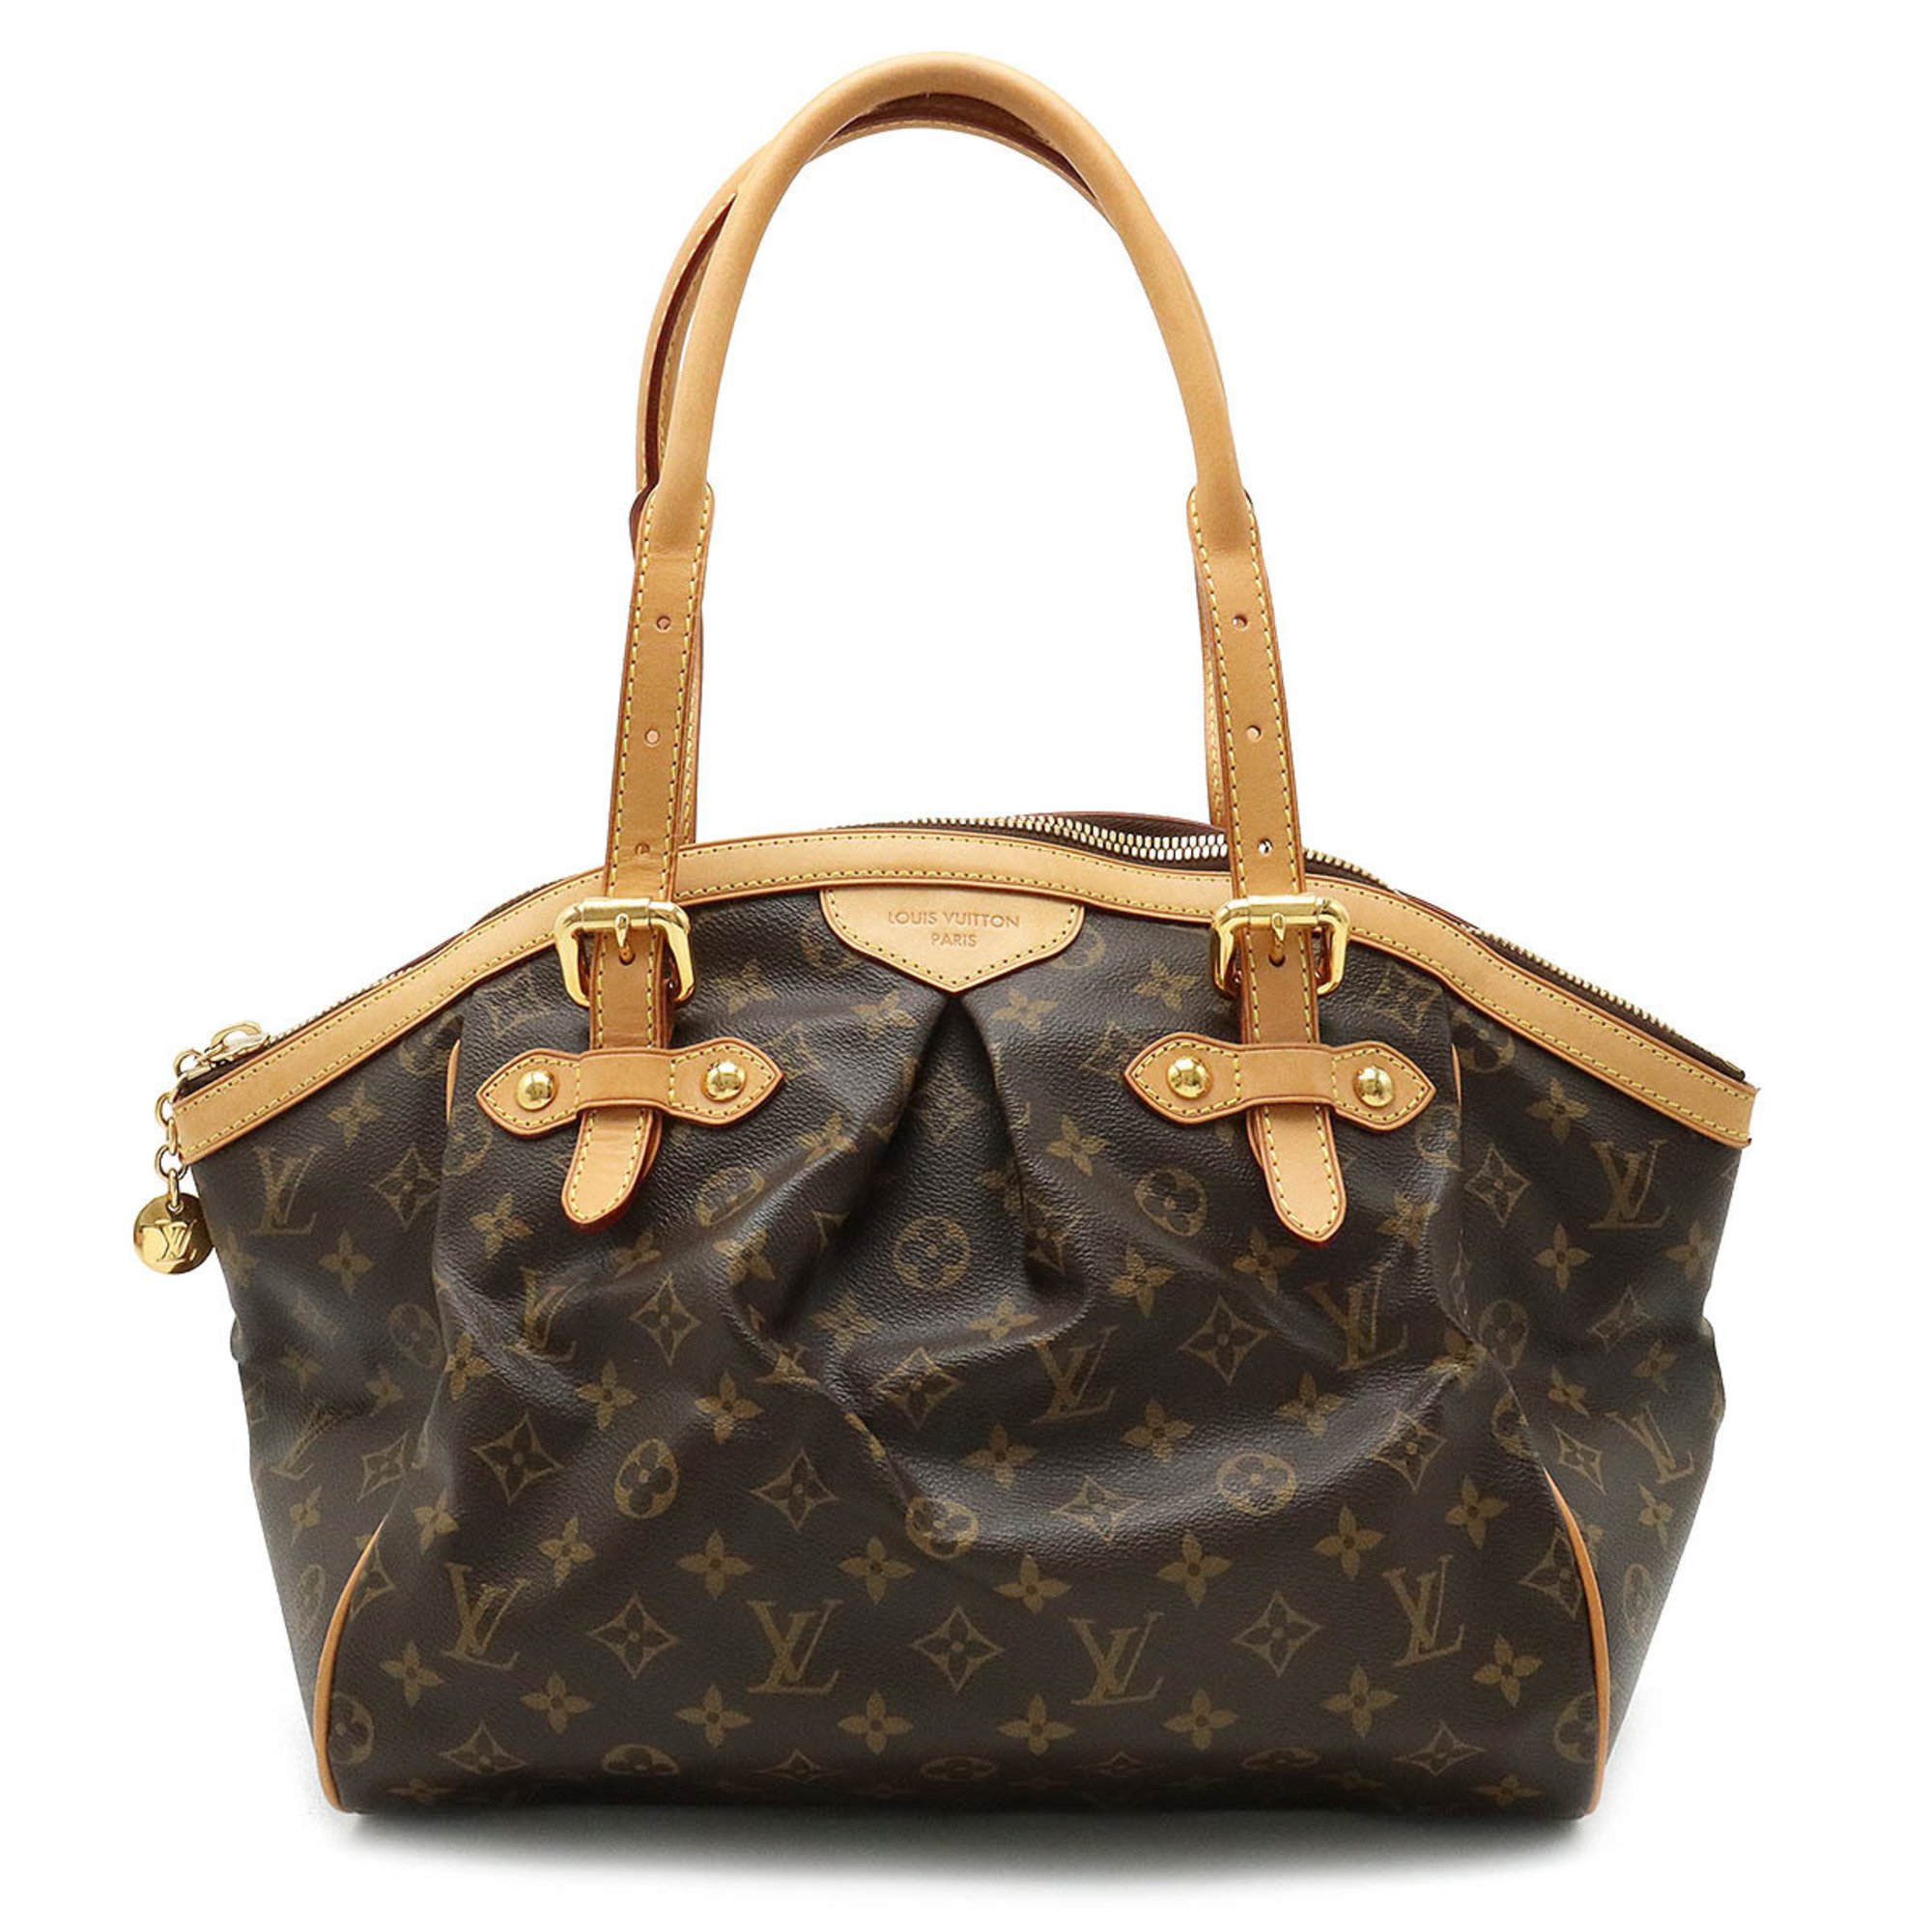 LOUIS VUITTON Louis Vuitton Monogram Tivoli GM Tote Bag Shoulder Handbag M40144